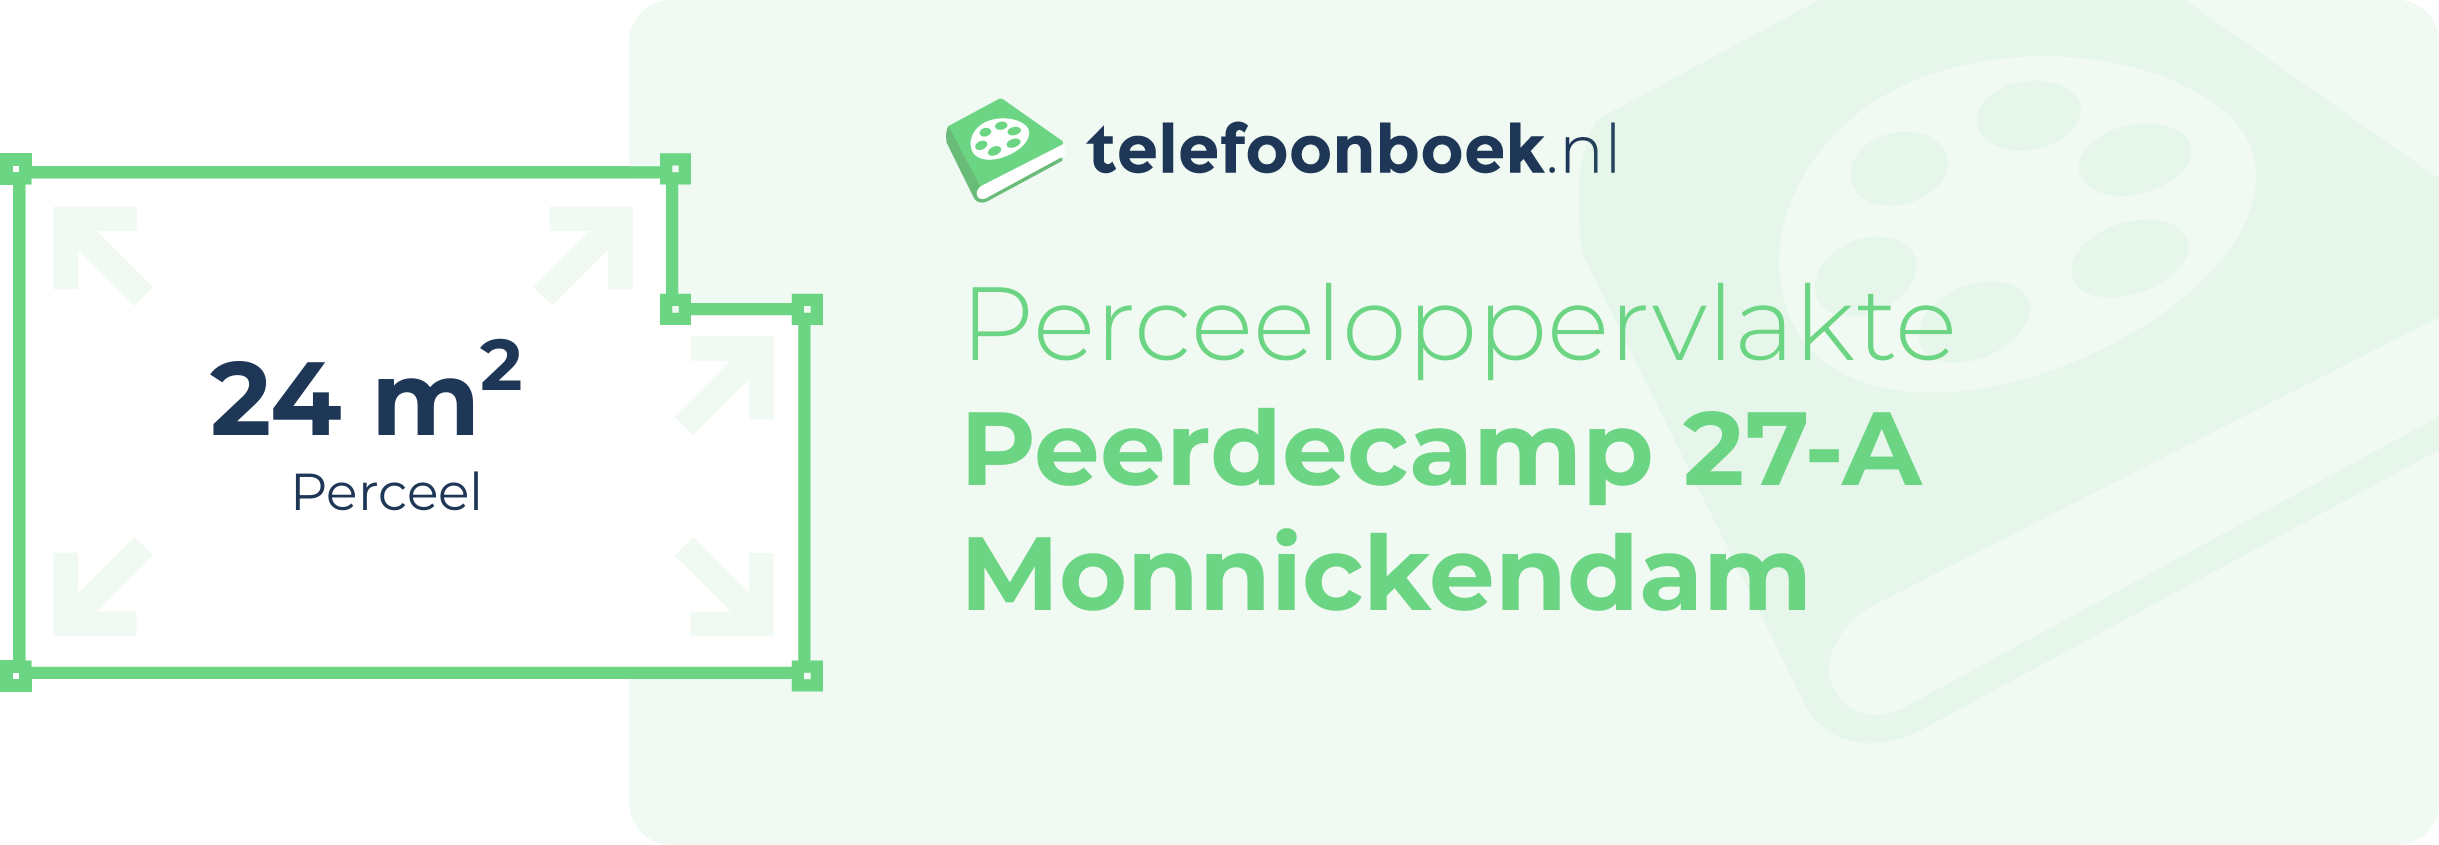 Perceeloppervlakte Peerdecamp 27-A Monnickendam